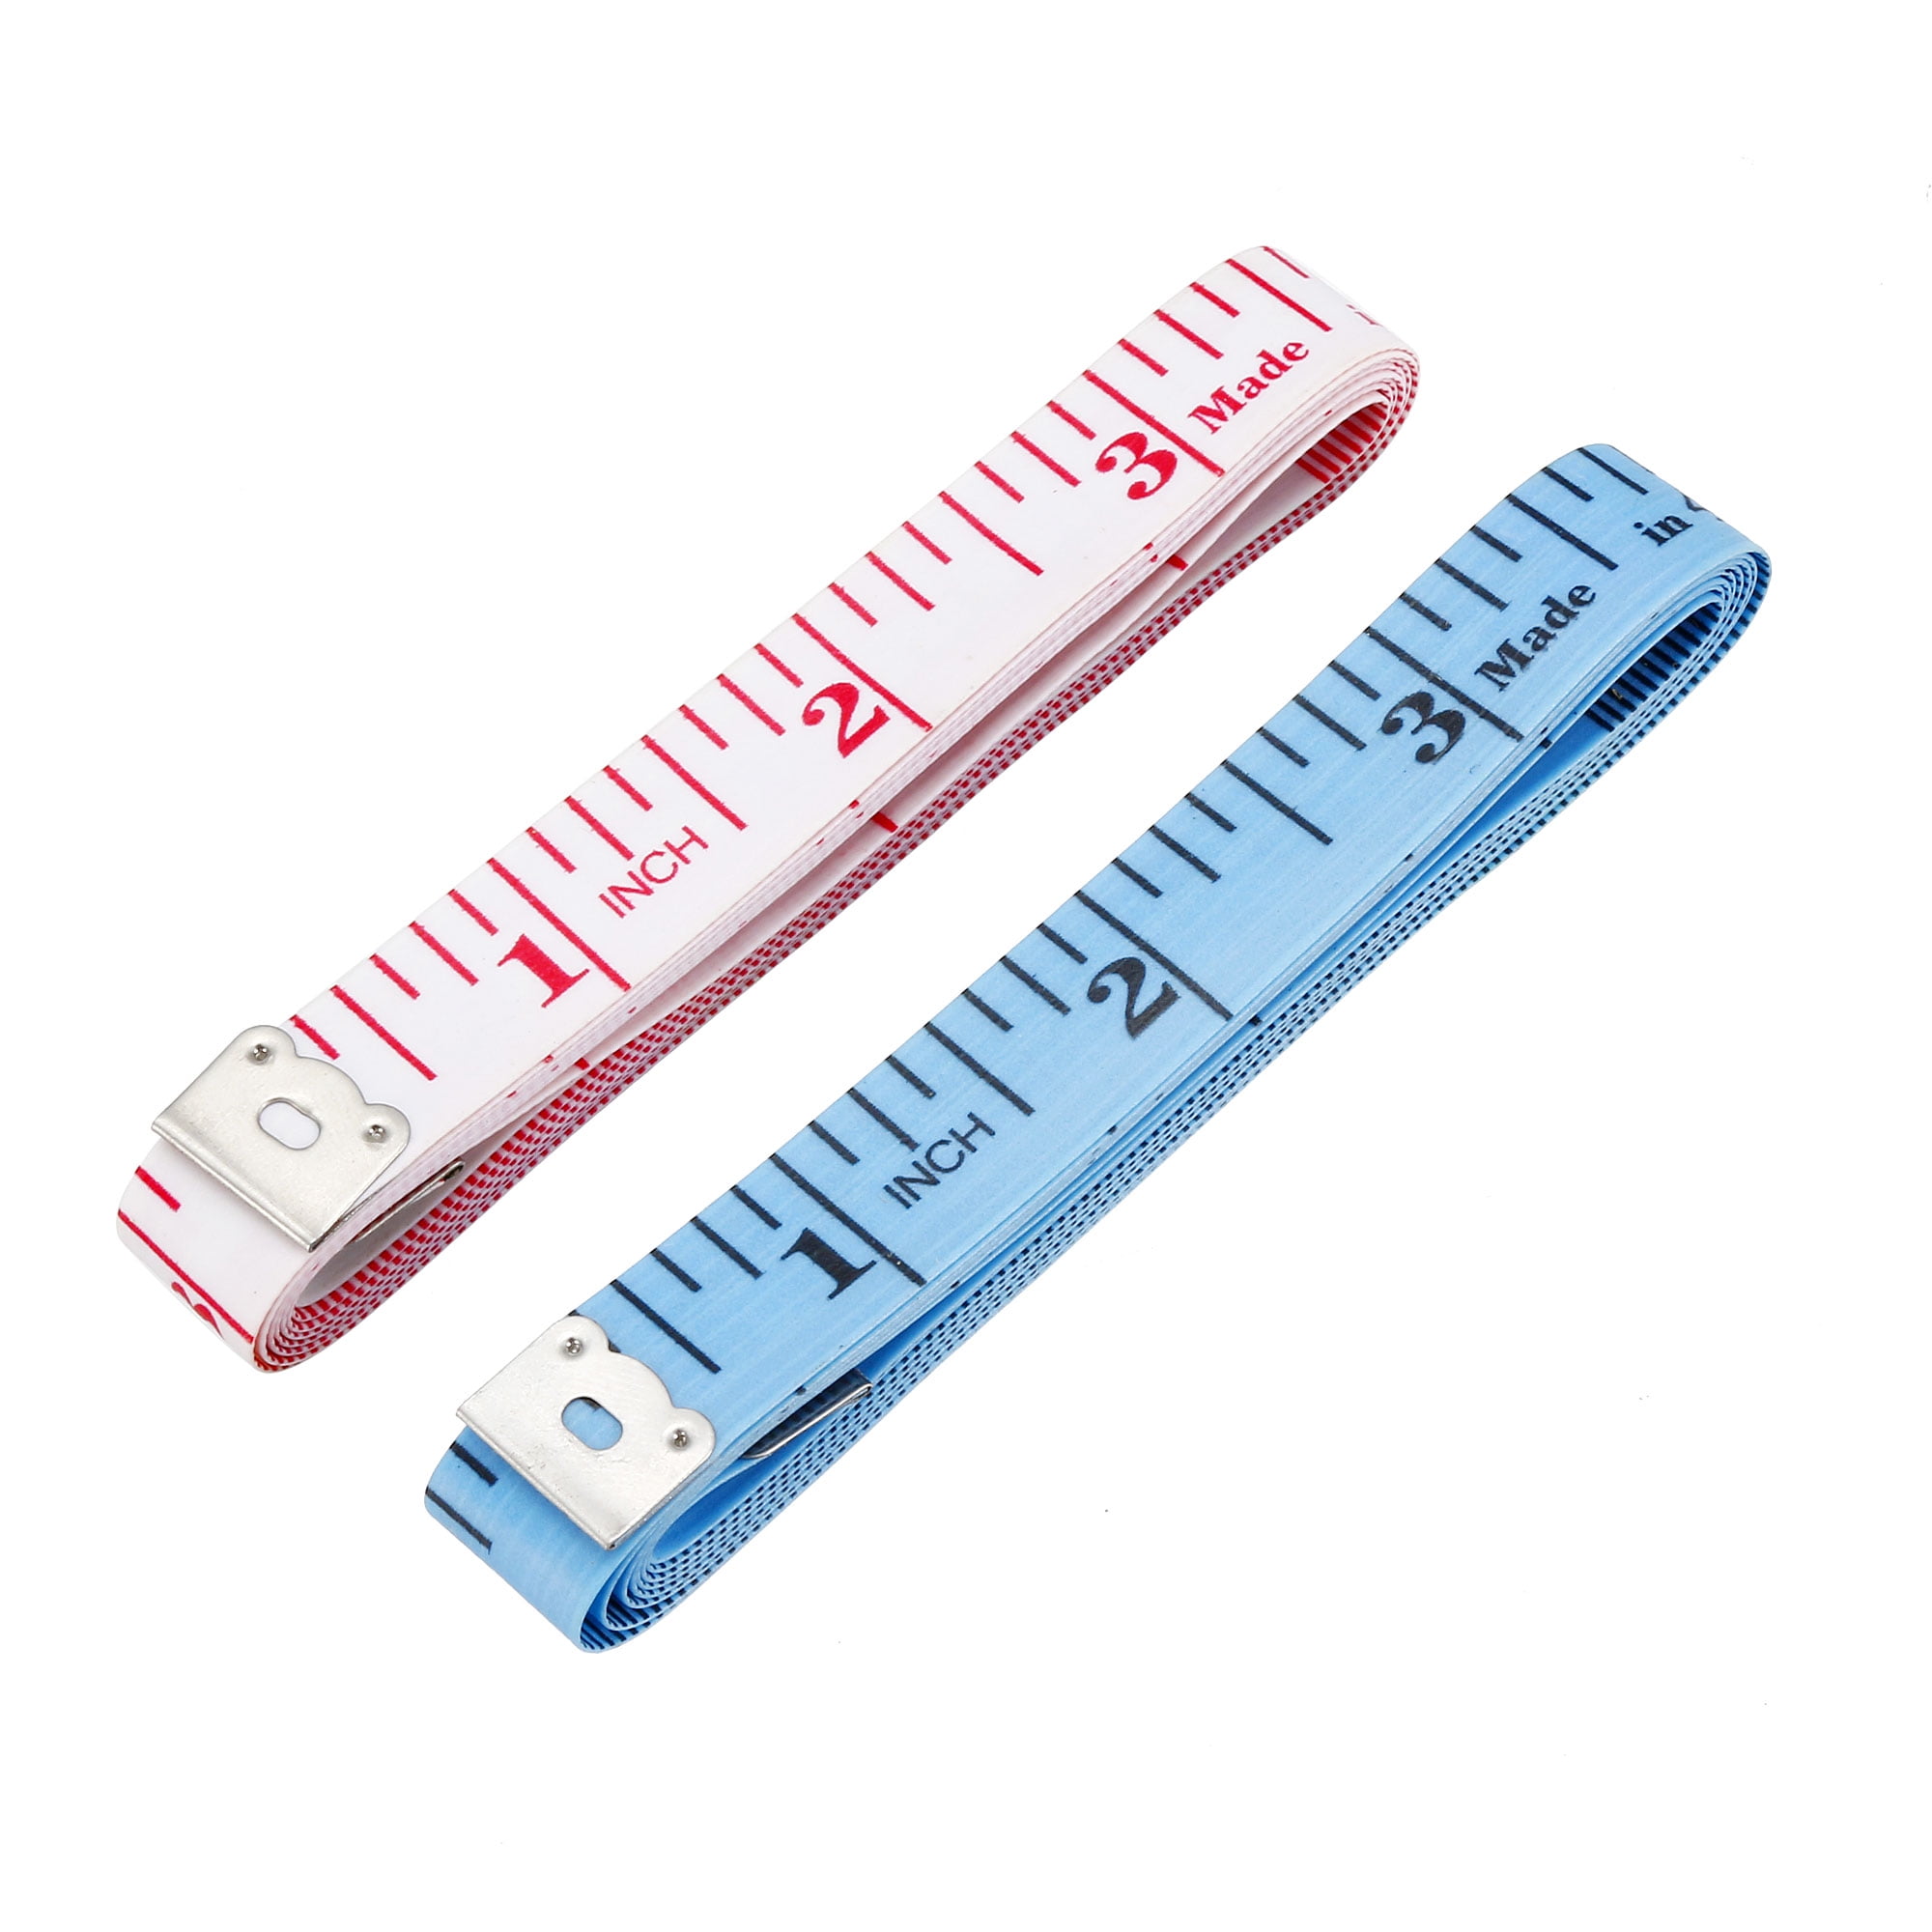 1 Heavy duty fiber Tape Measure Ruler English & Metric 